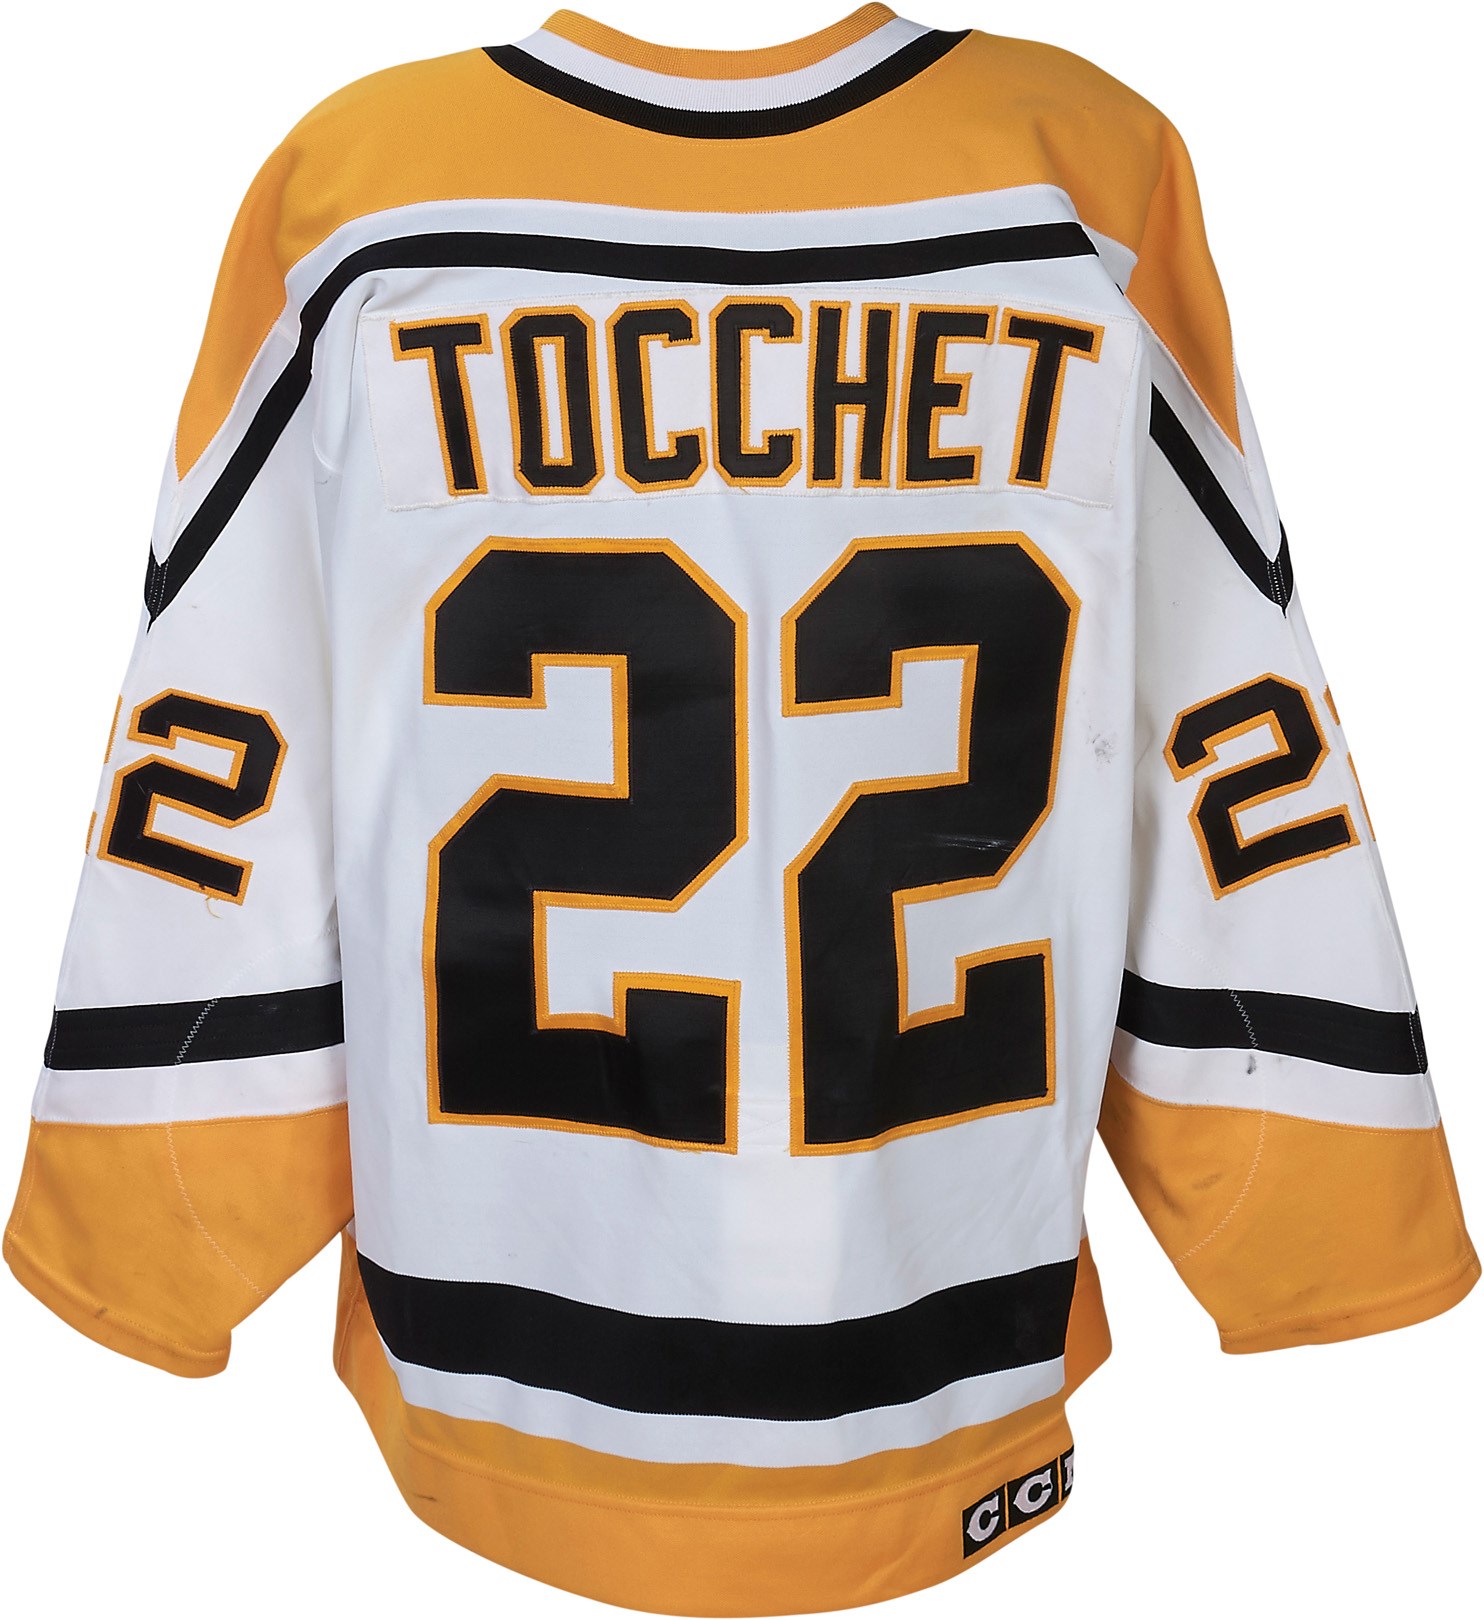 - 1992-93 Rick Tocchet Pittsburgh Penguins Game Worn Jersey